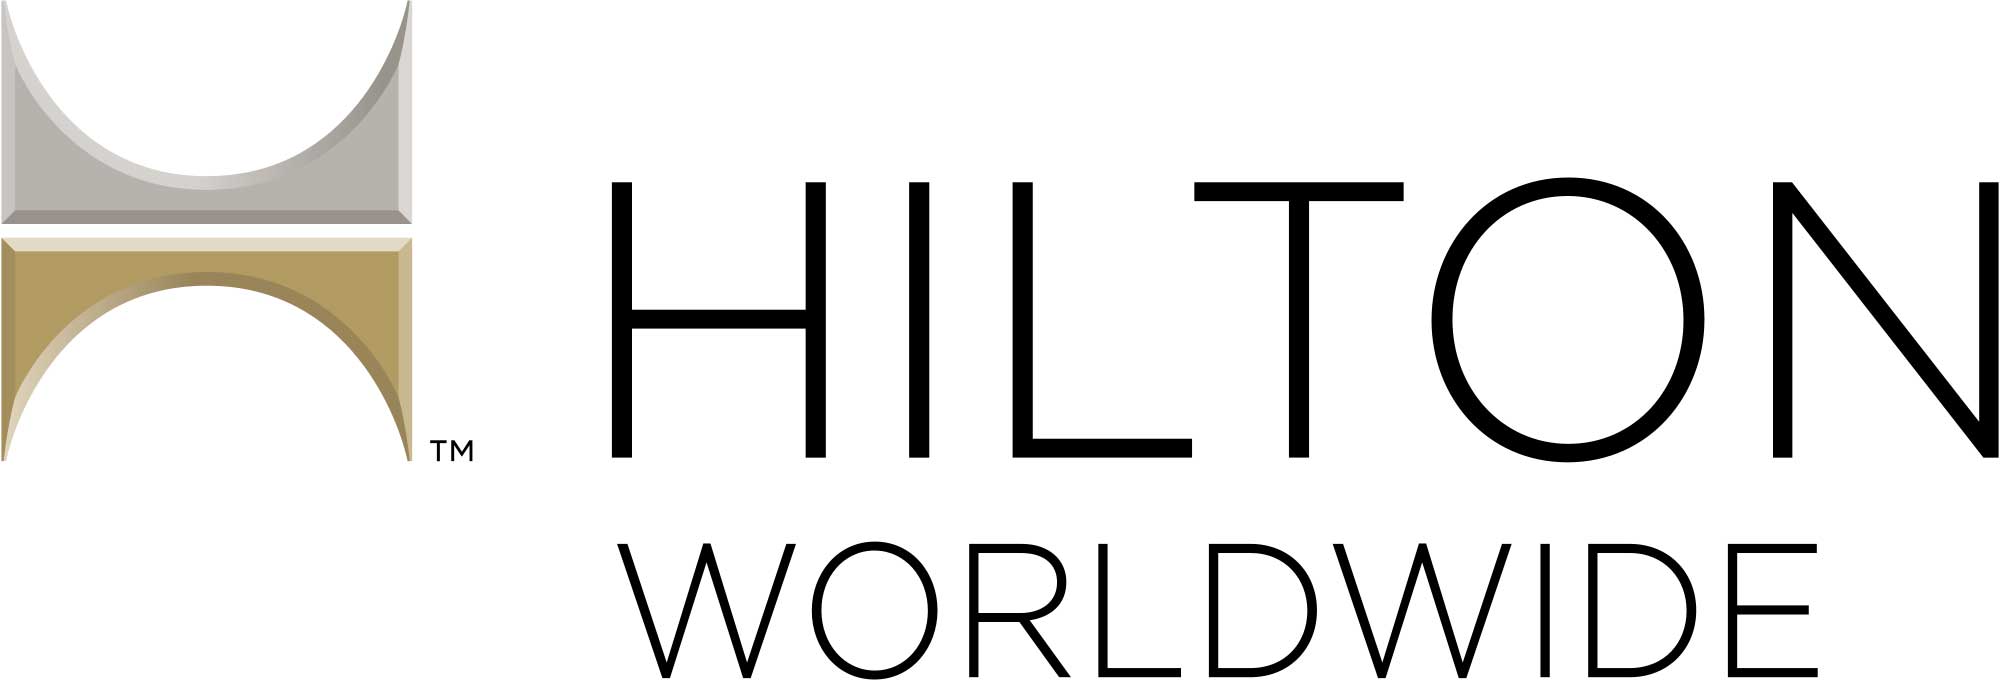 logo hilton